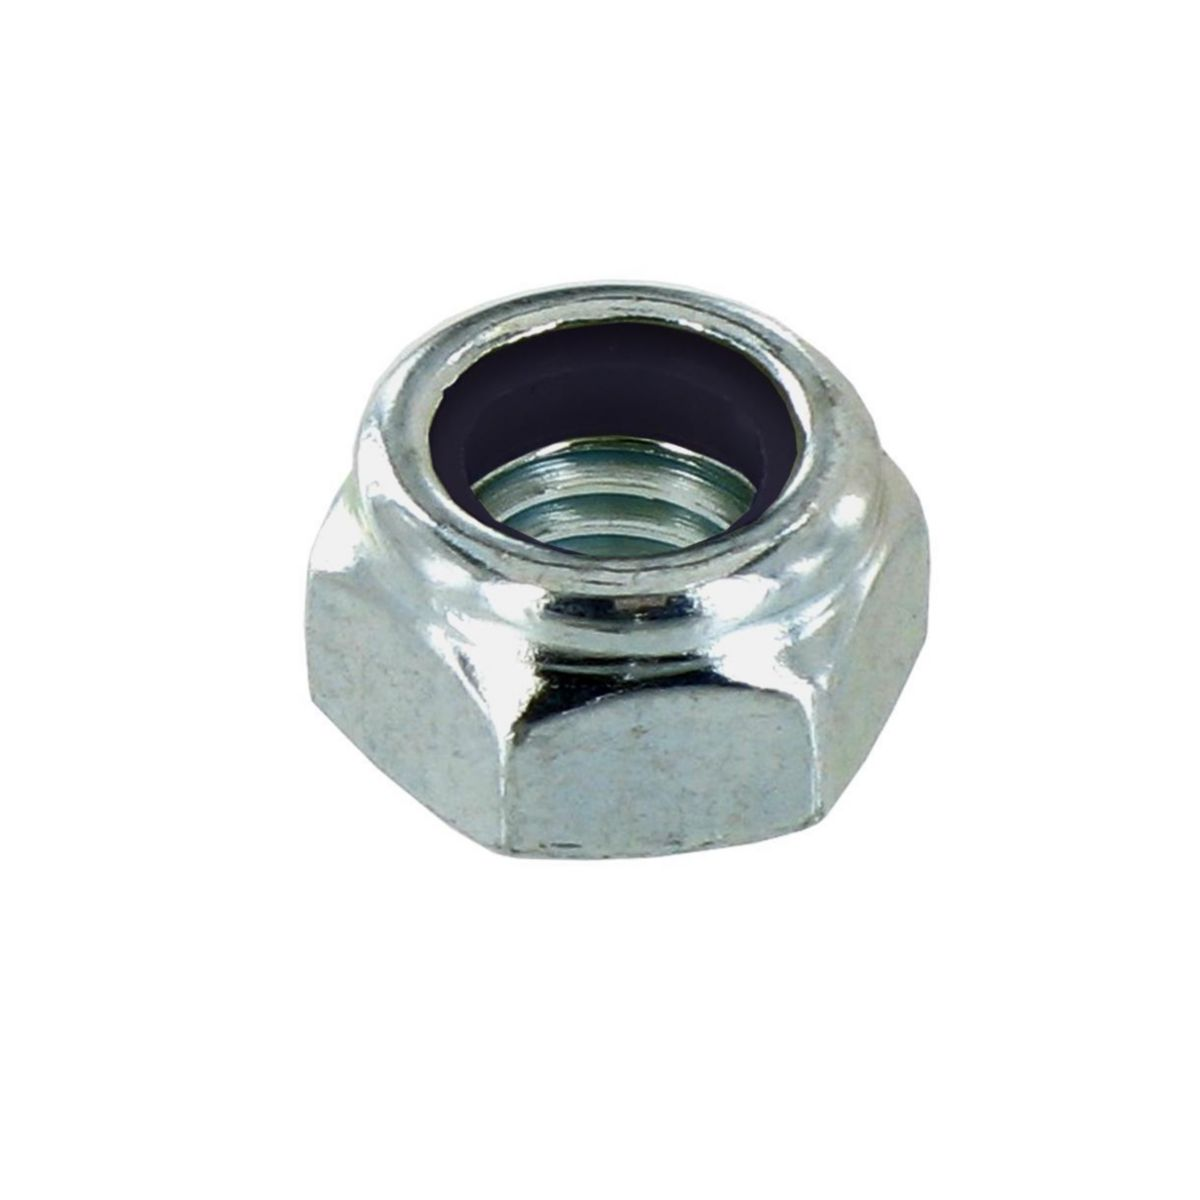 AZI self-locking nut 8 mm, 12 pieces.